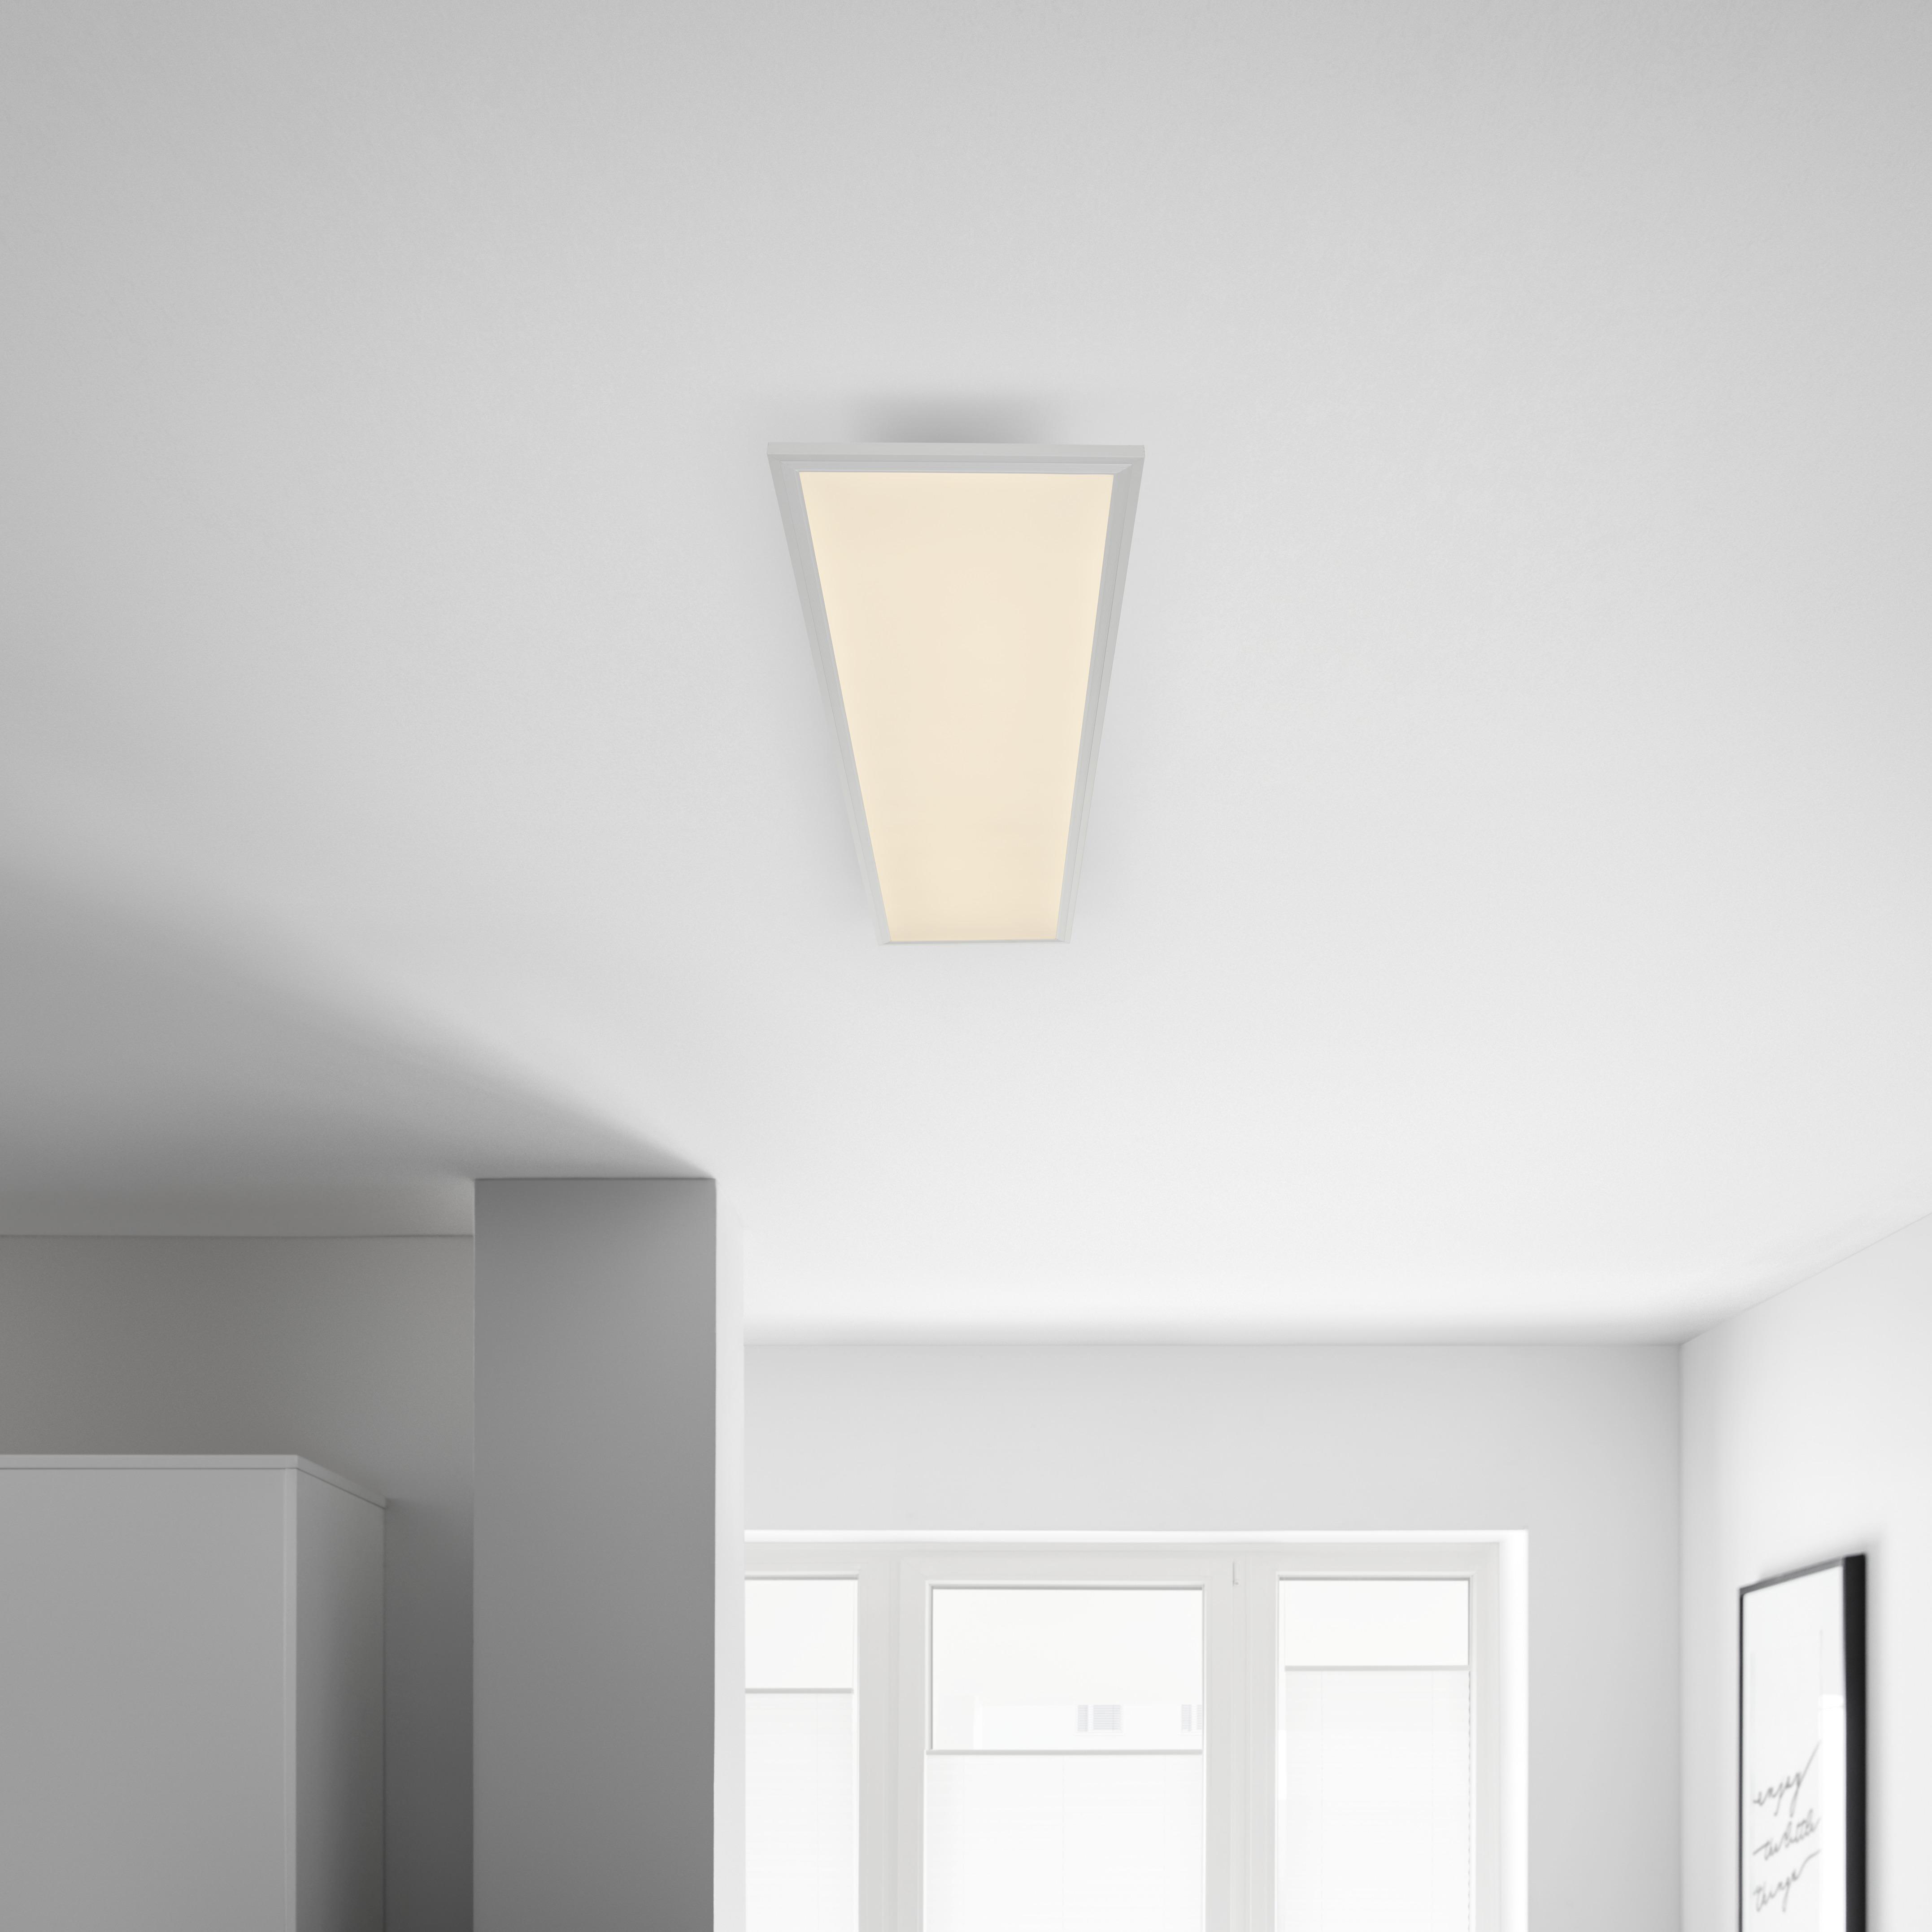 LED stropné svietidlo Cornelius 119/29cm, 40 Watt - biela, Moderný, plast (120/30/7,5cm) - Premium Living